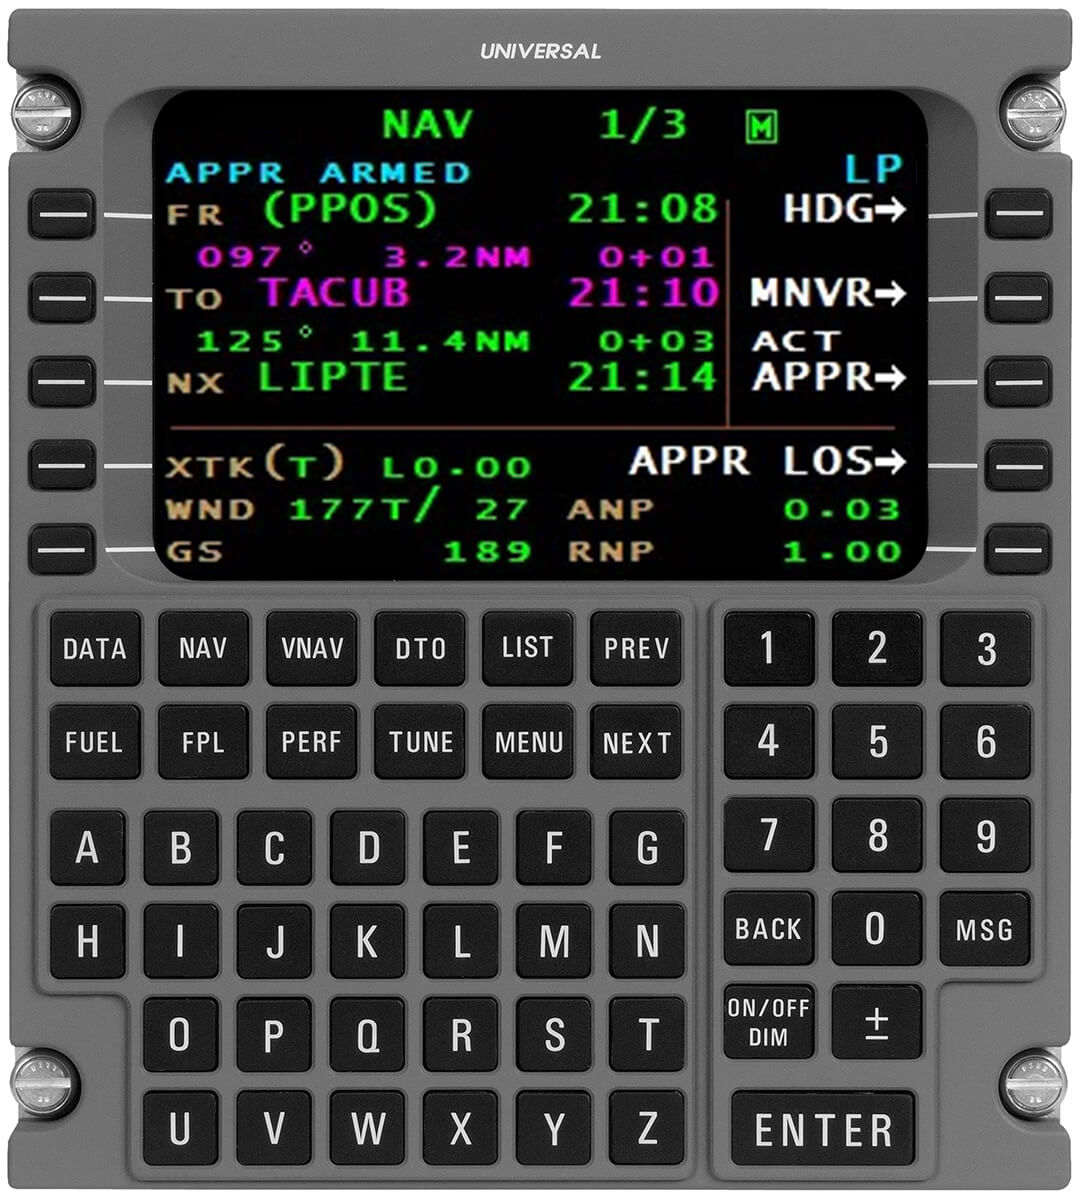 Fms index. FMS ma2000. Flight Management System FMS. FMS самолета. FMS прибор.